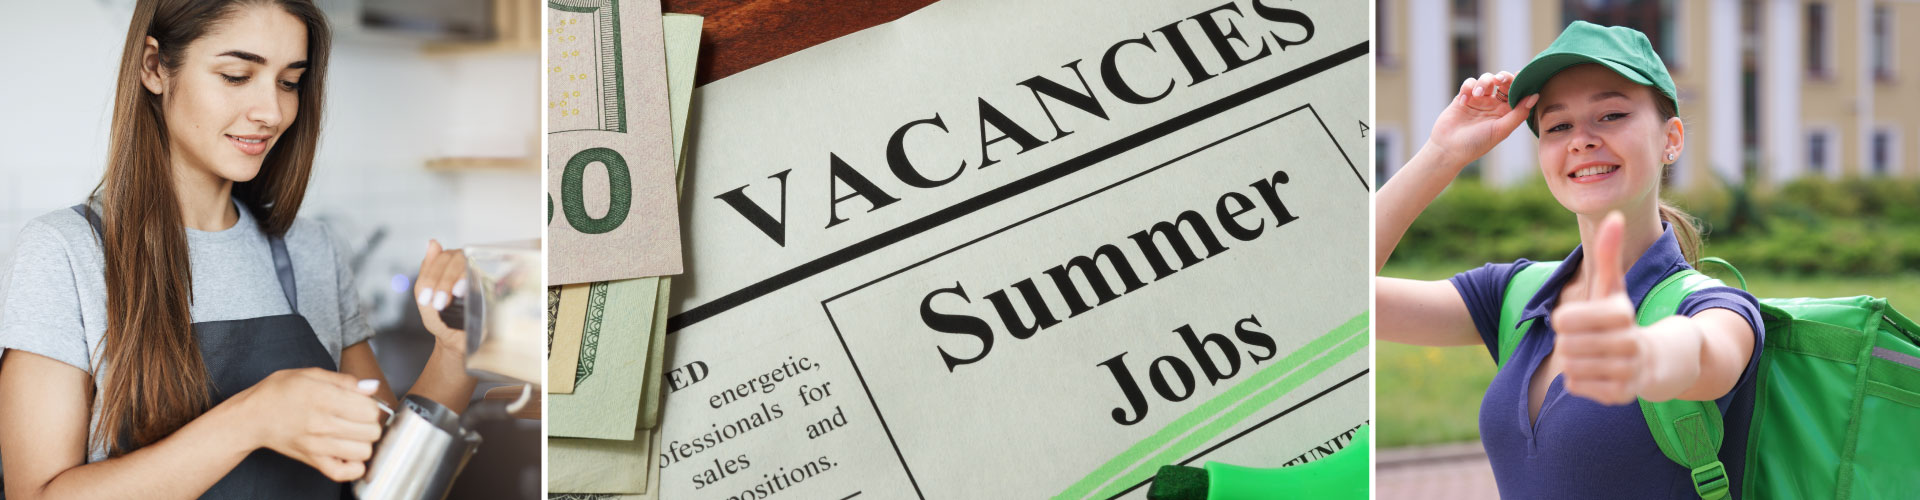 How To Get a Summer Job